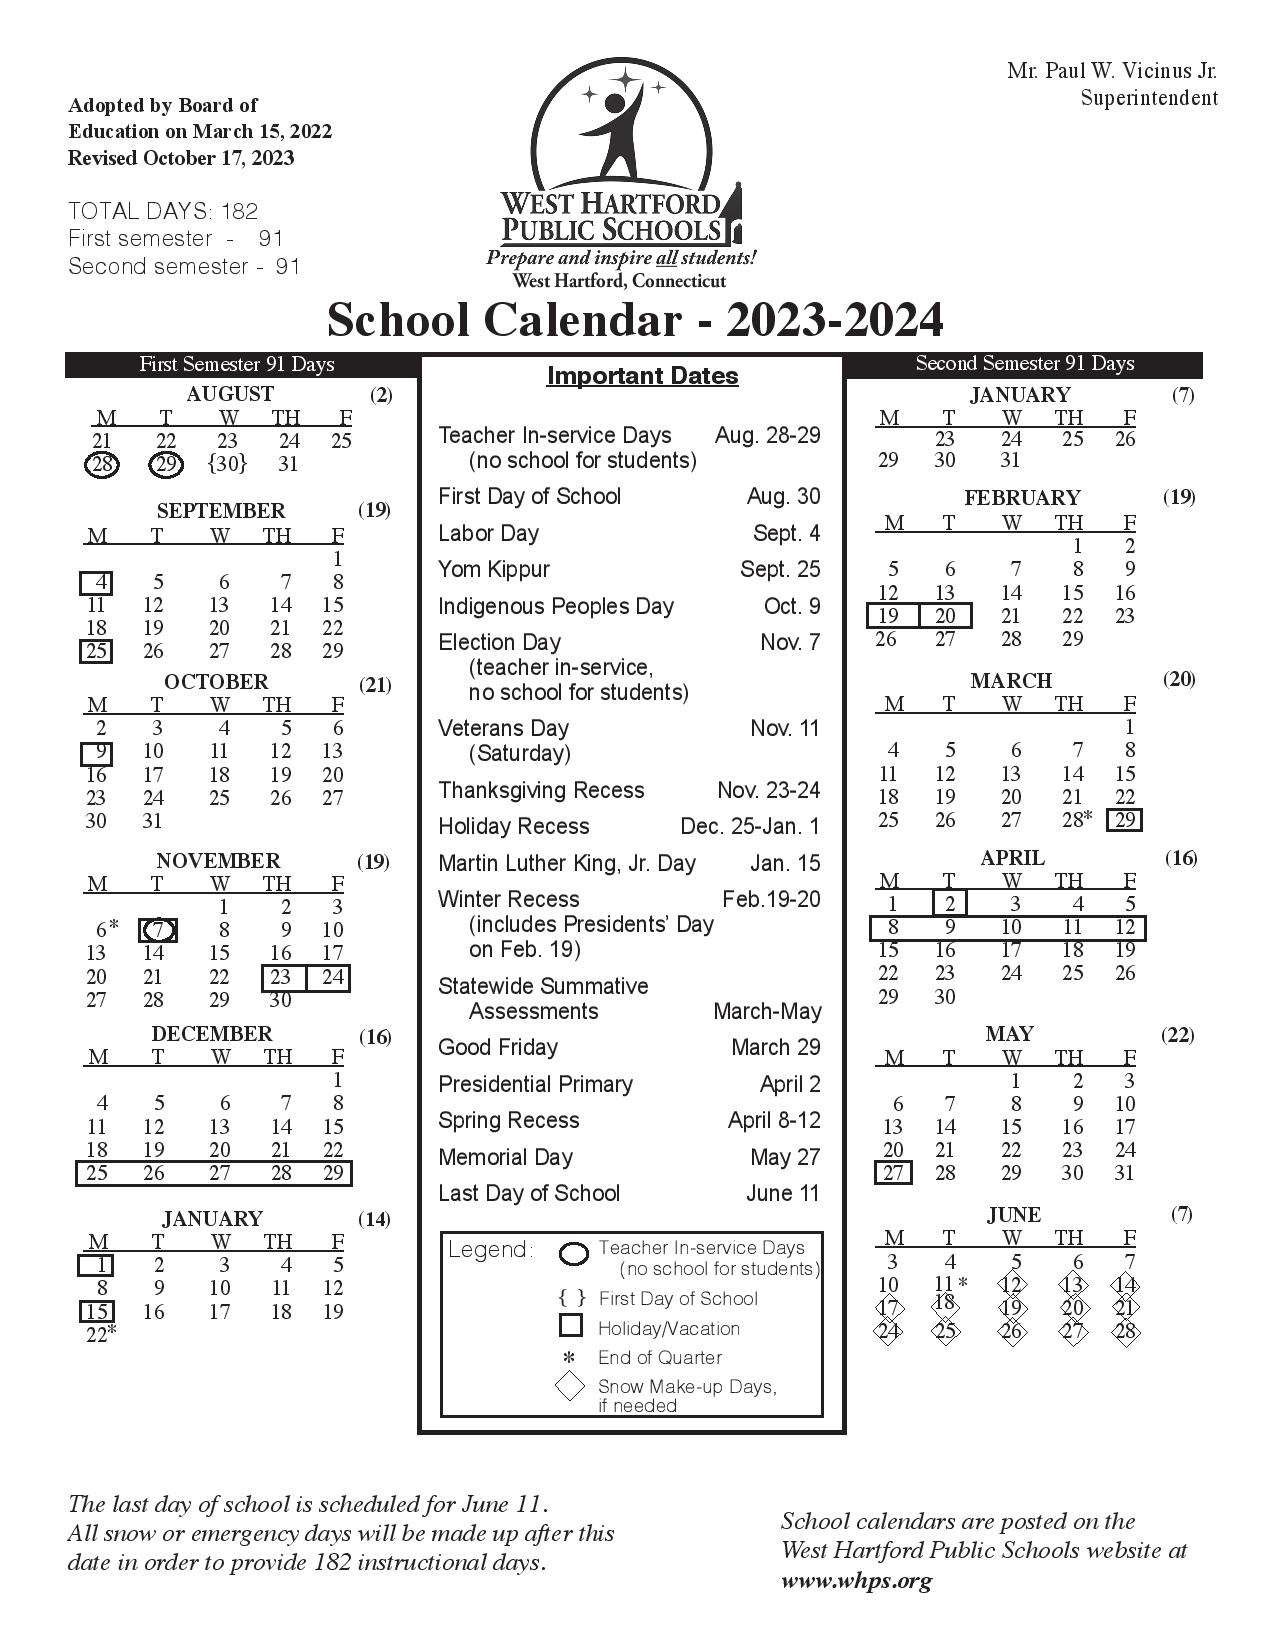 West Hartford Public Schools Calendar 2023 2024 in PDF